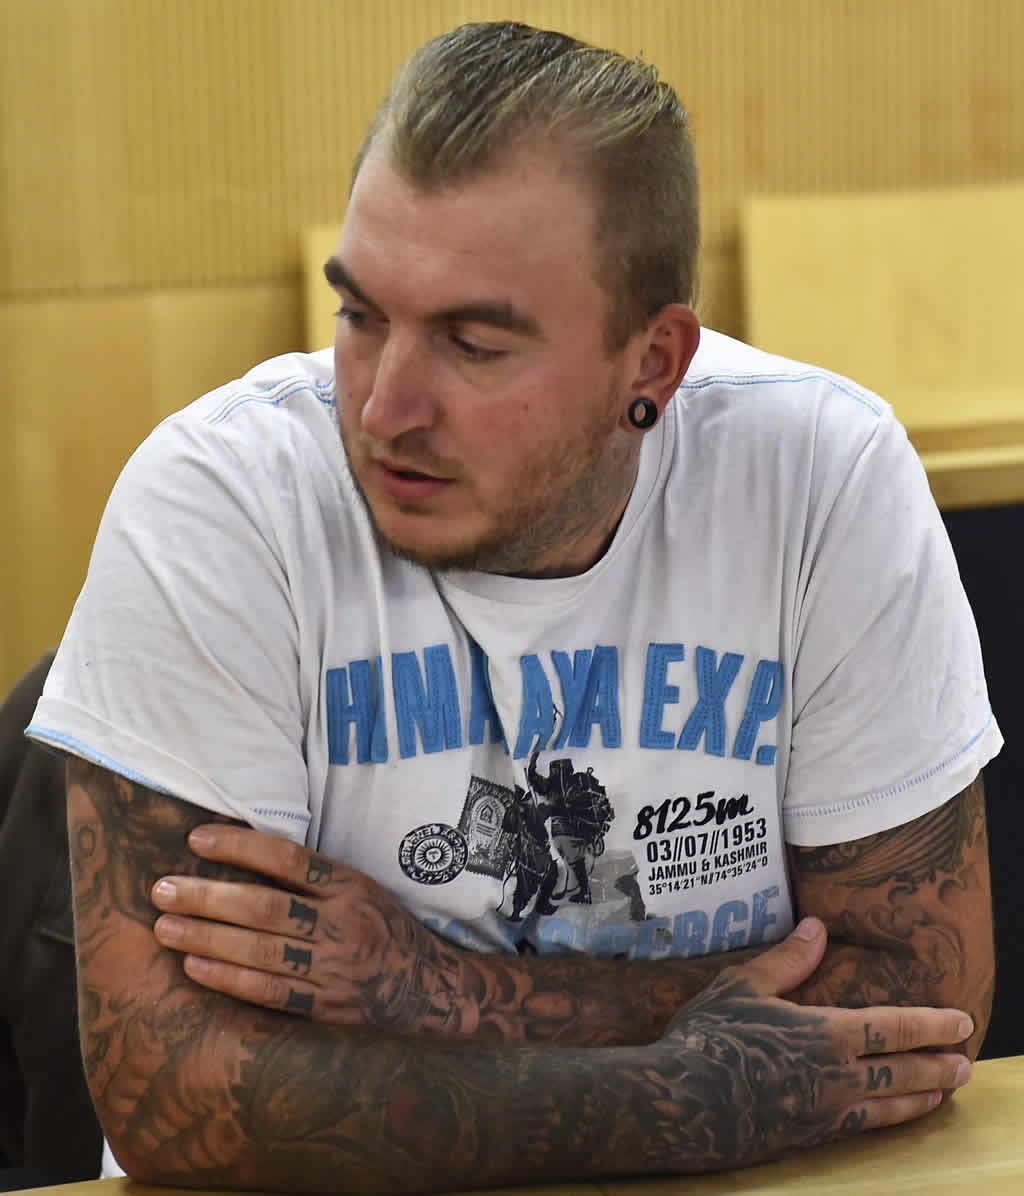 Condenan a ocho meses de cárcel a un político alemán por un tatuaje nazi